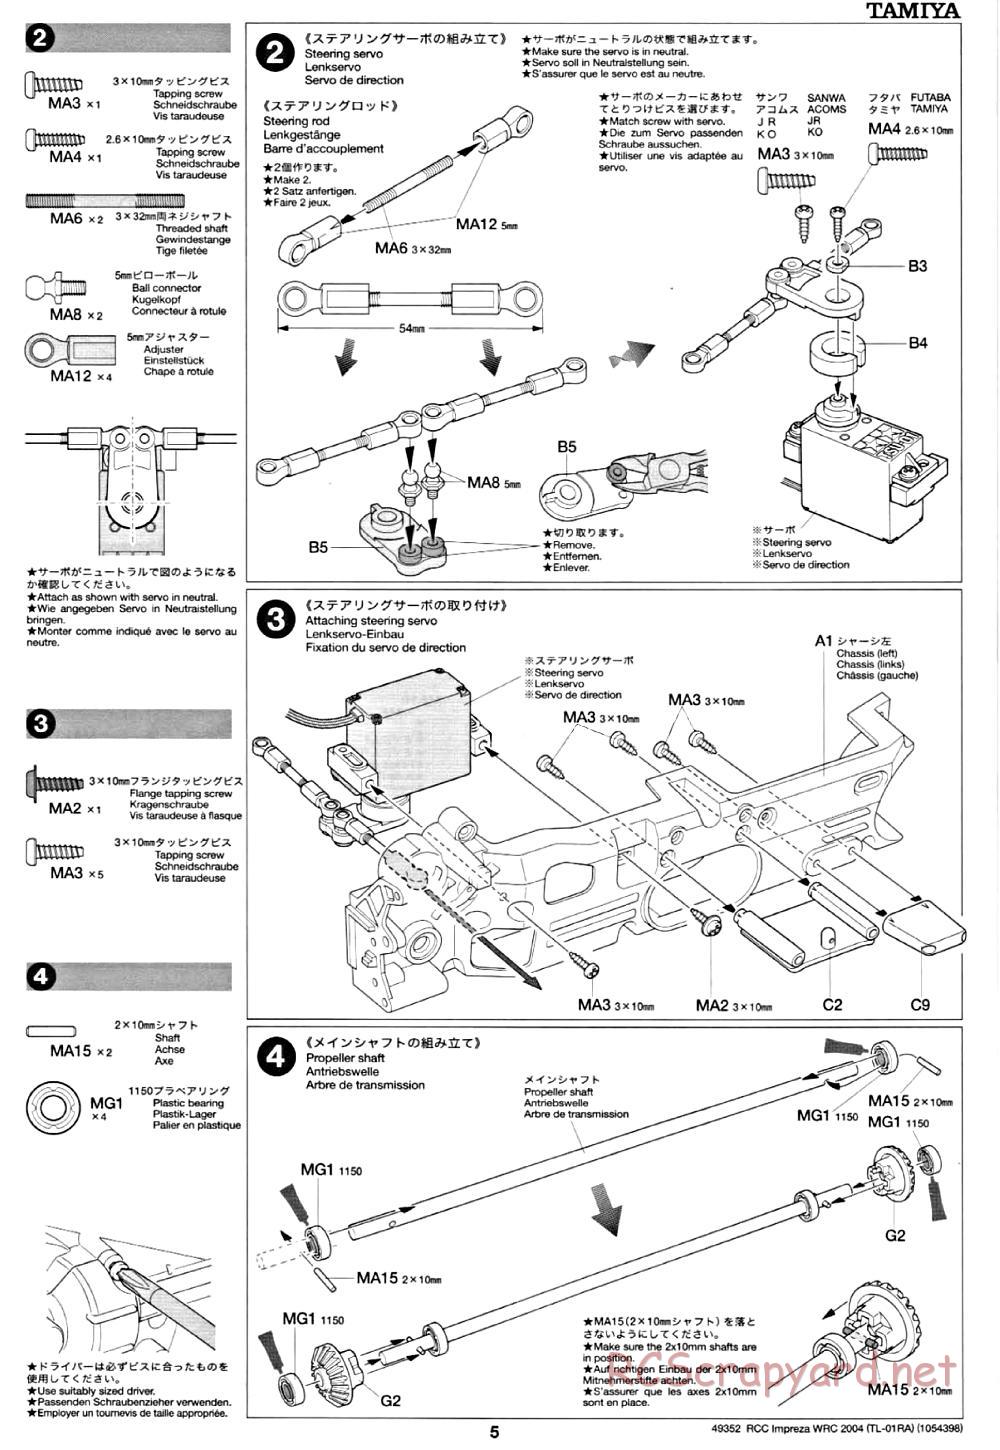 Tamiya - Subaru Impreza WRC 2004 Chassis - Manual - Page 5